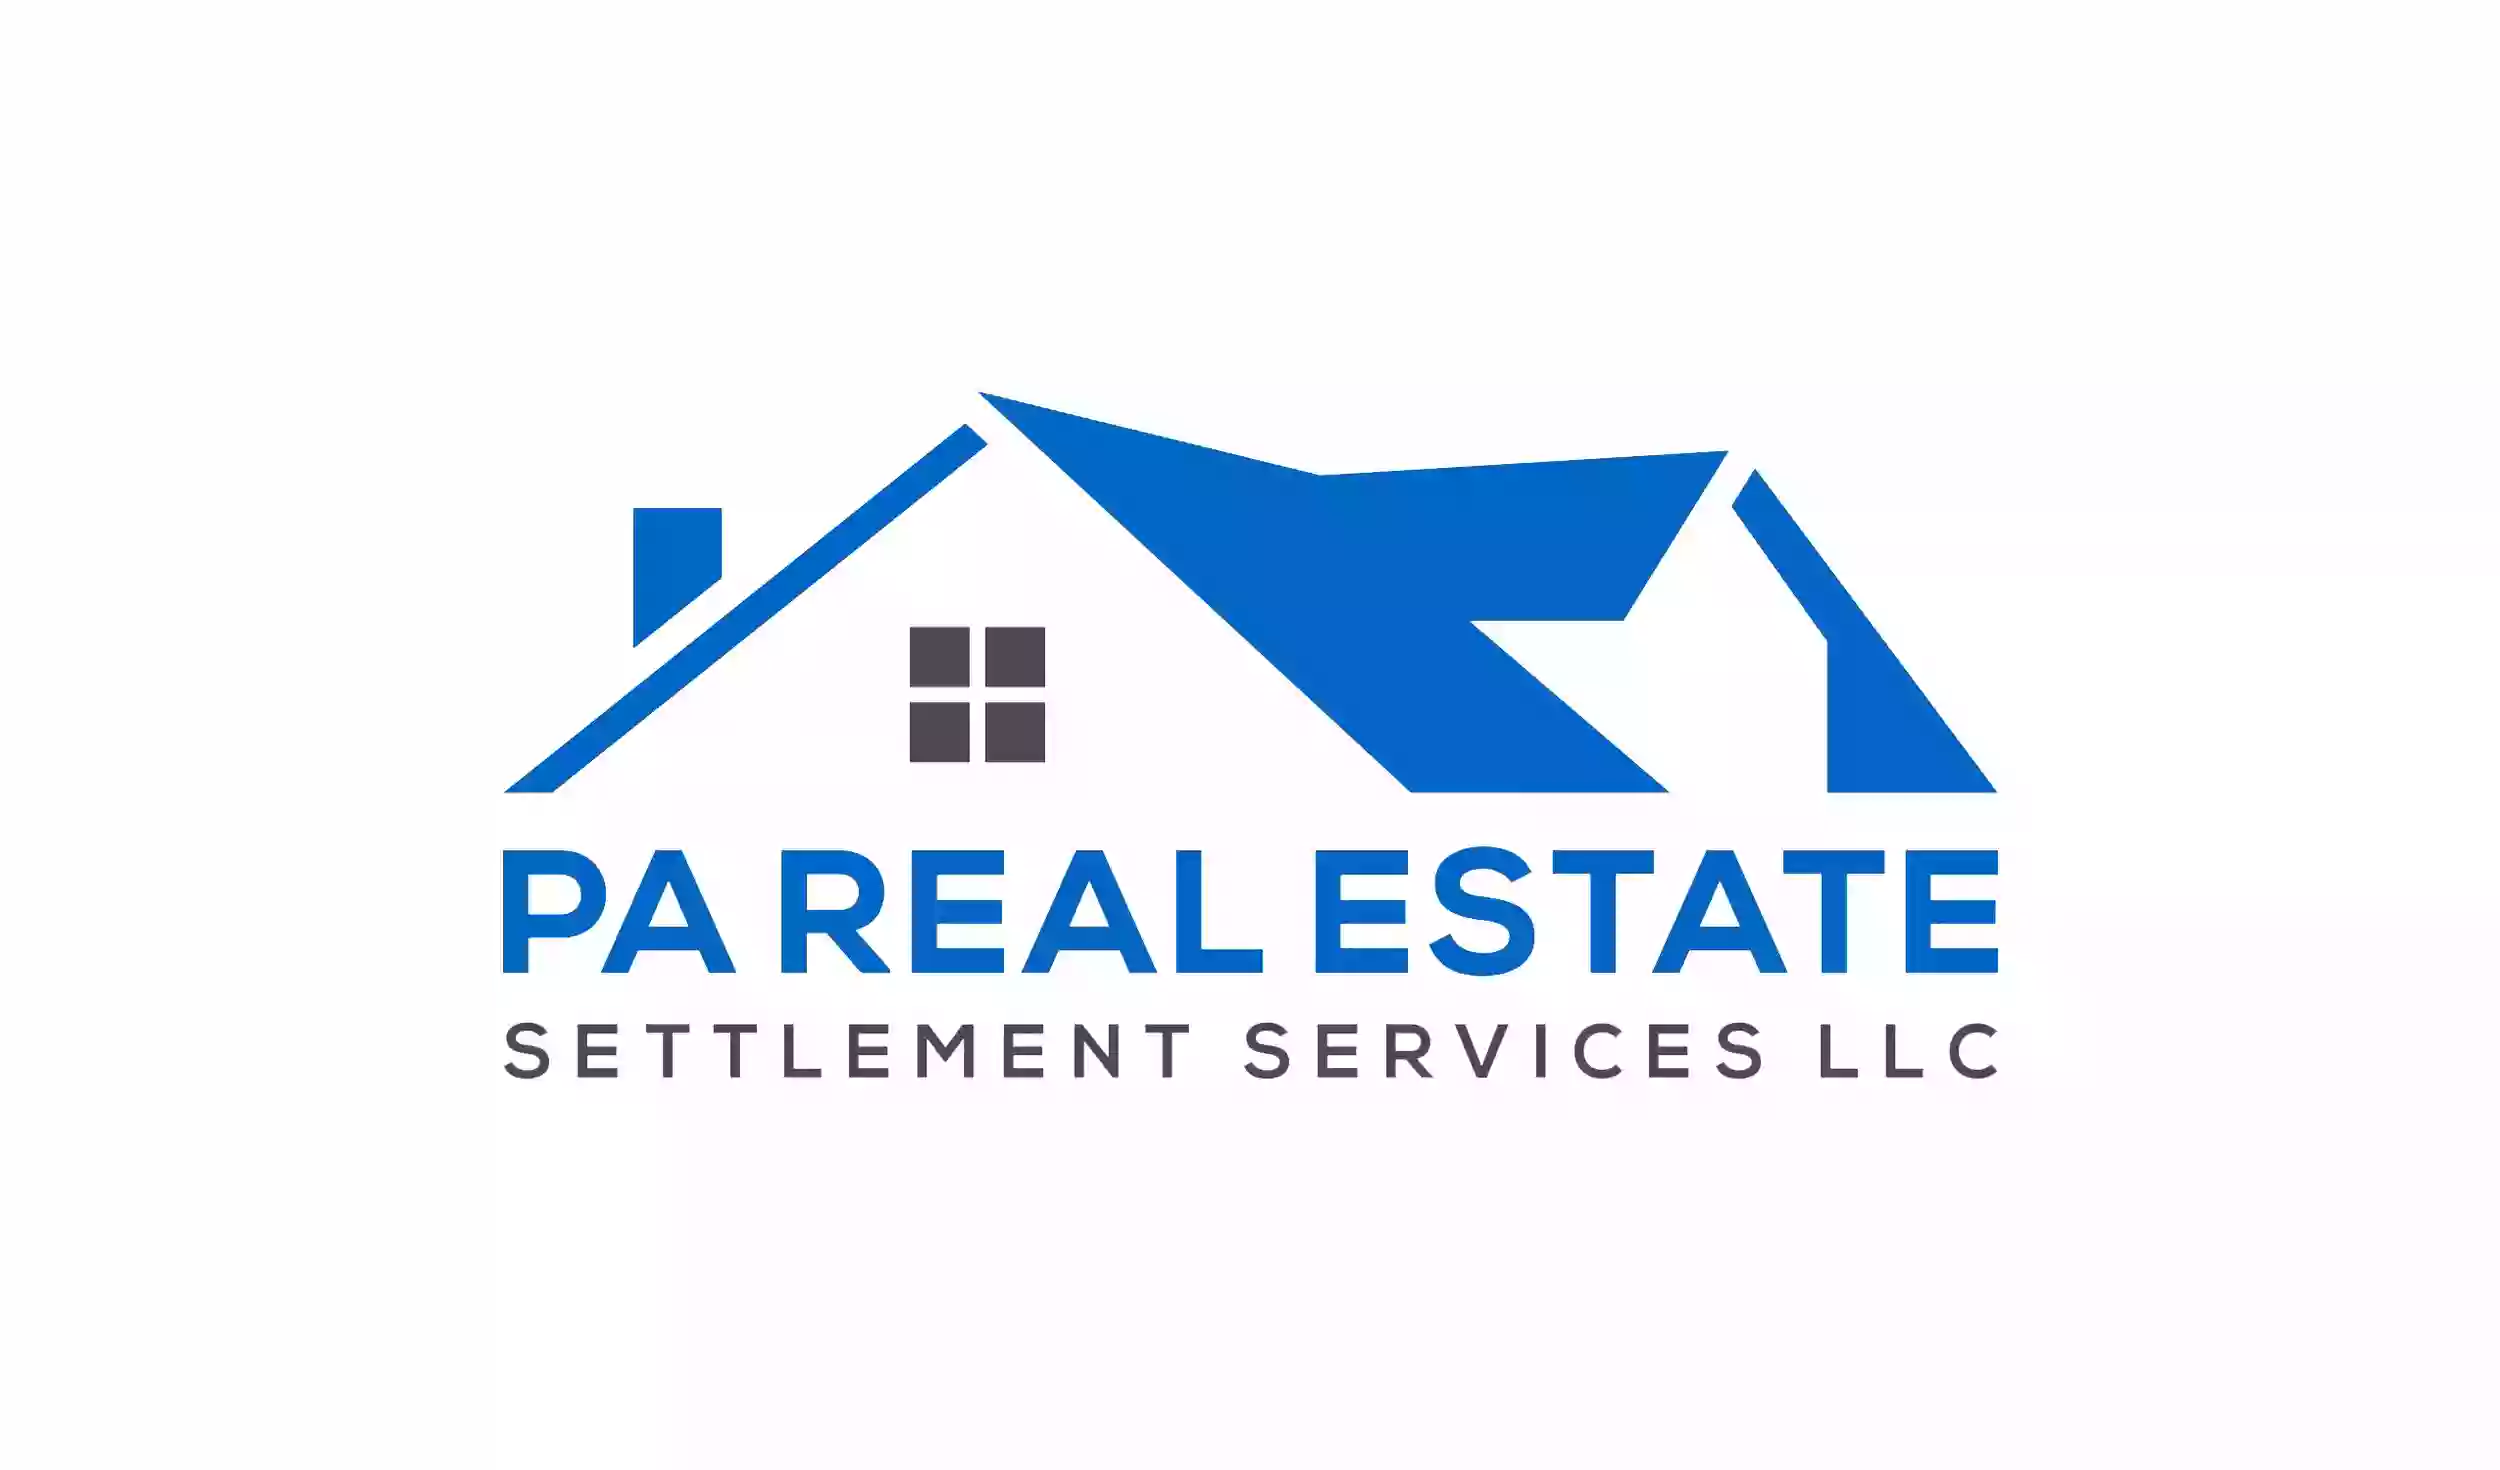 PA Real Estate Settlement Services, LLC